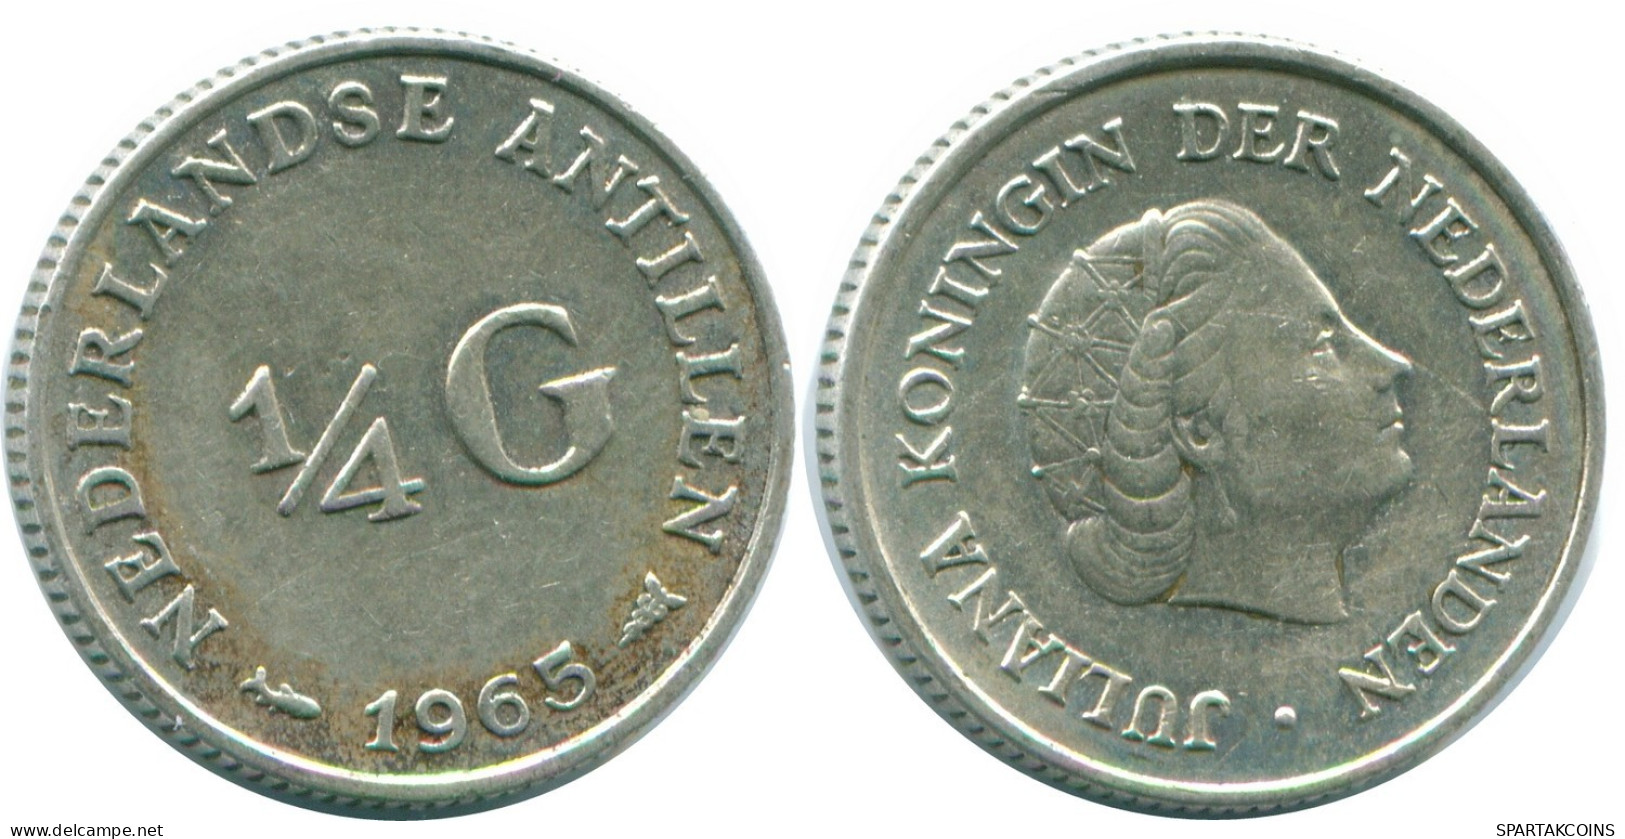 1/4 GULDEN 1965 NETHERLANDS ANTILLES SILVER Colonial Coin #NL11270.4.U.A - Netherlands Antilles